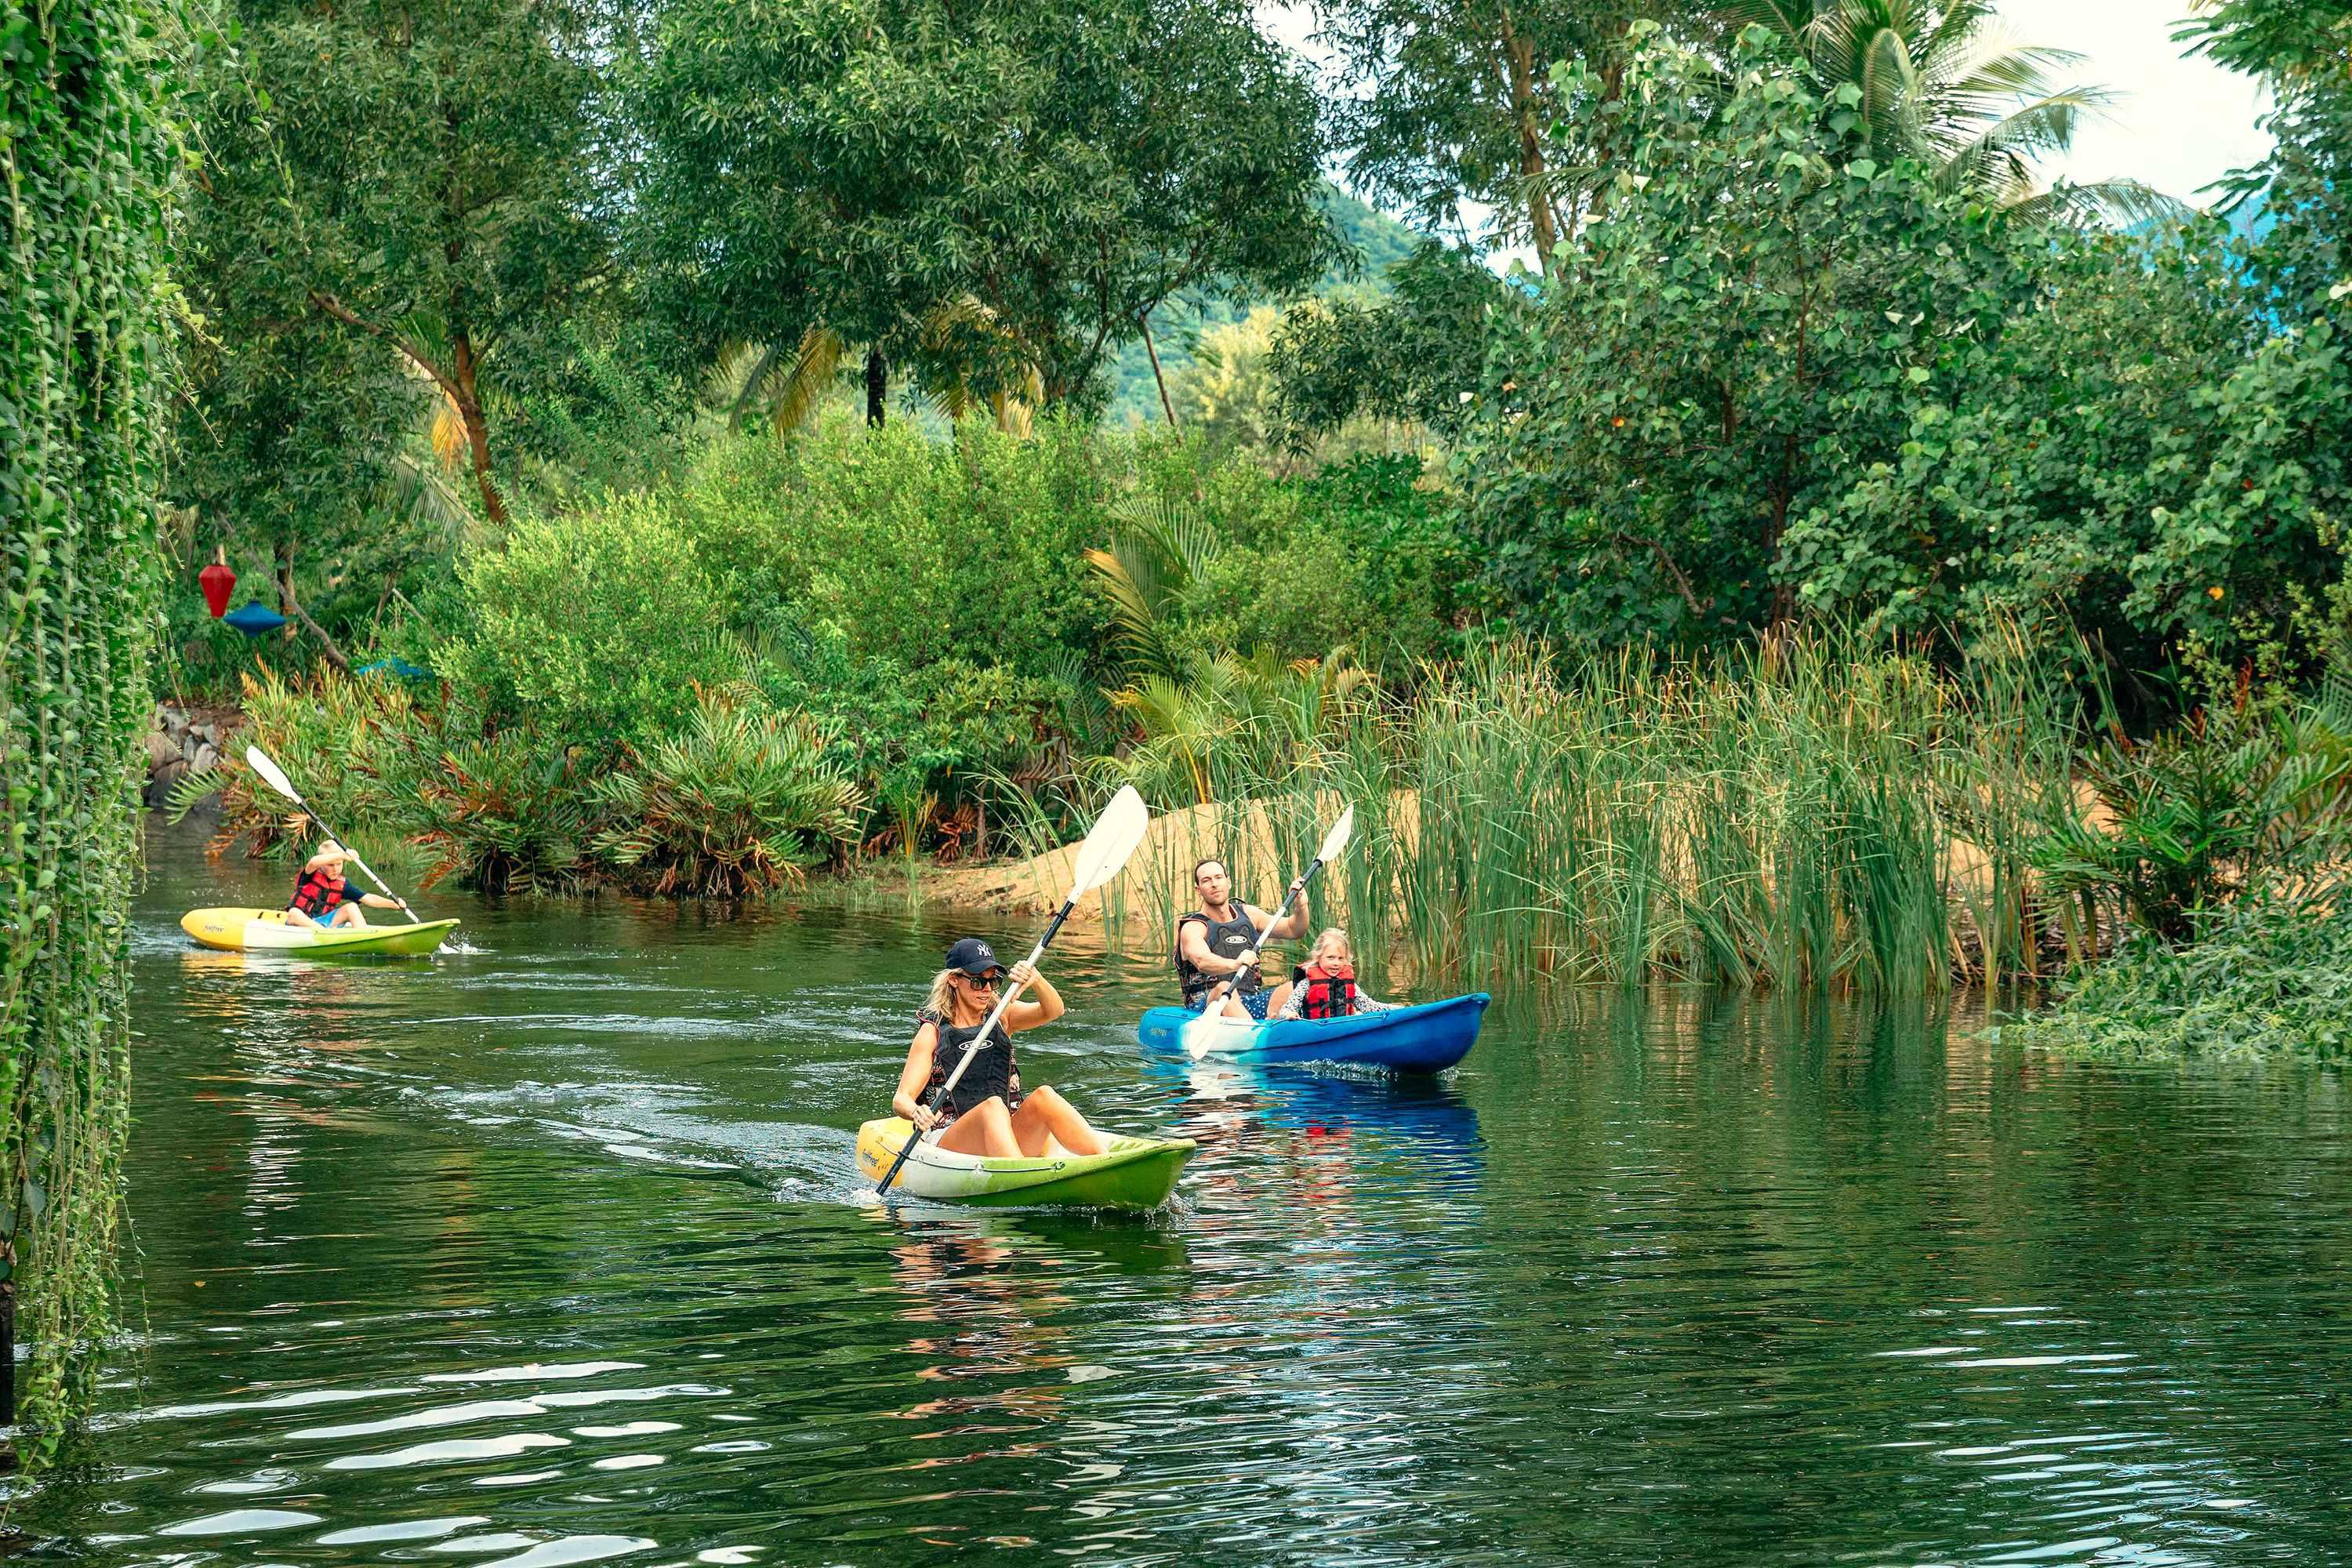 Kayak activities